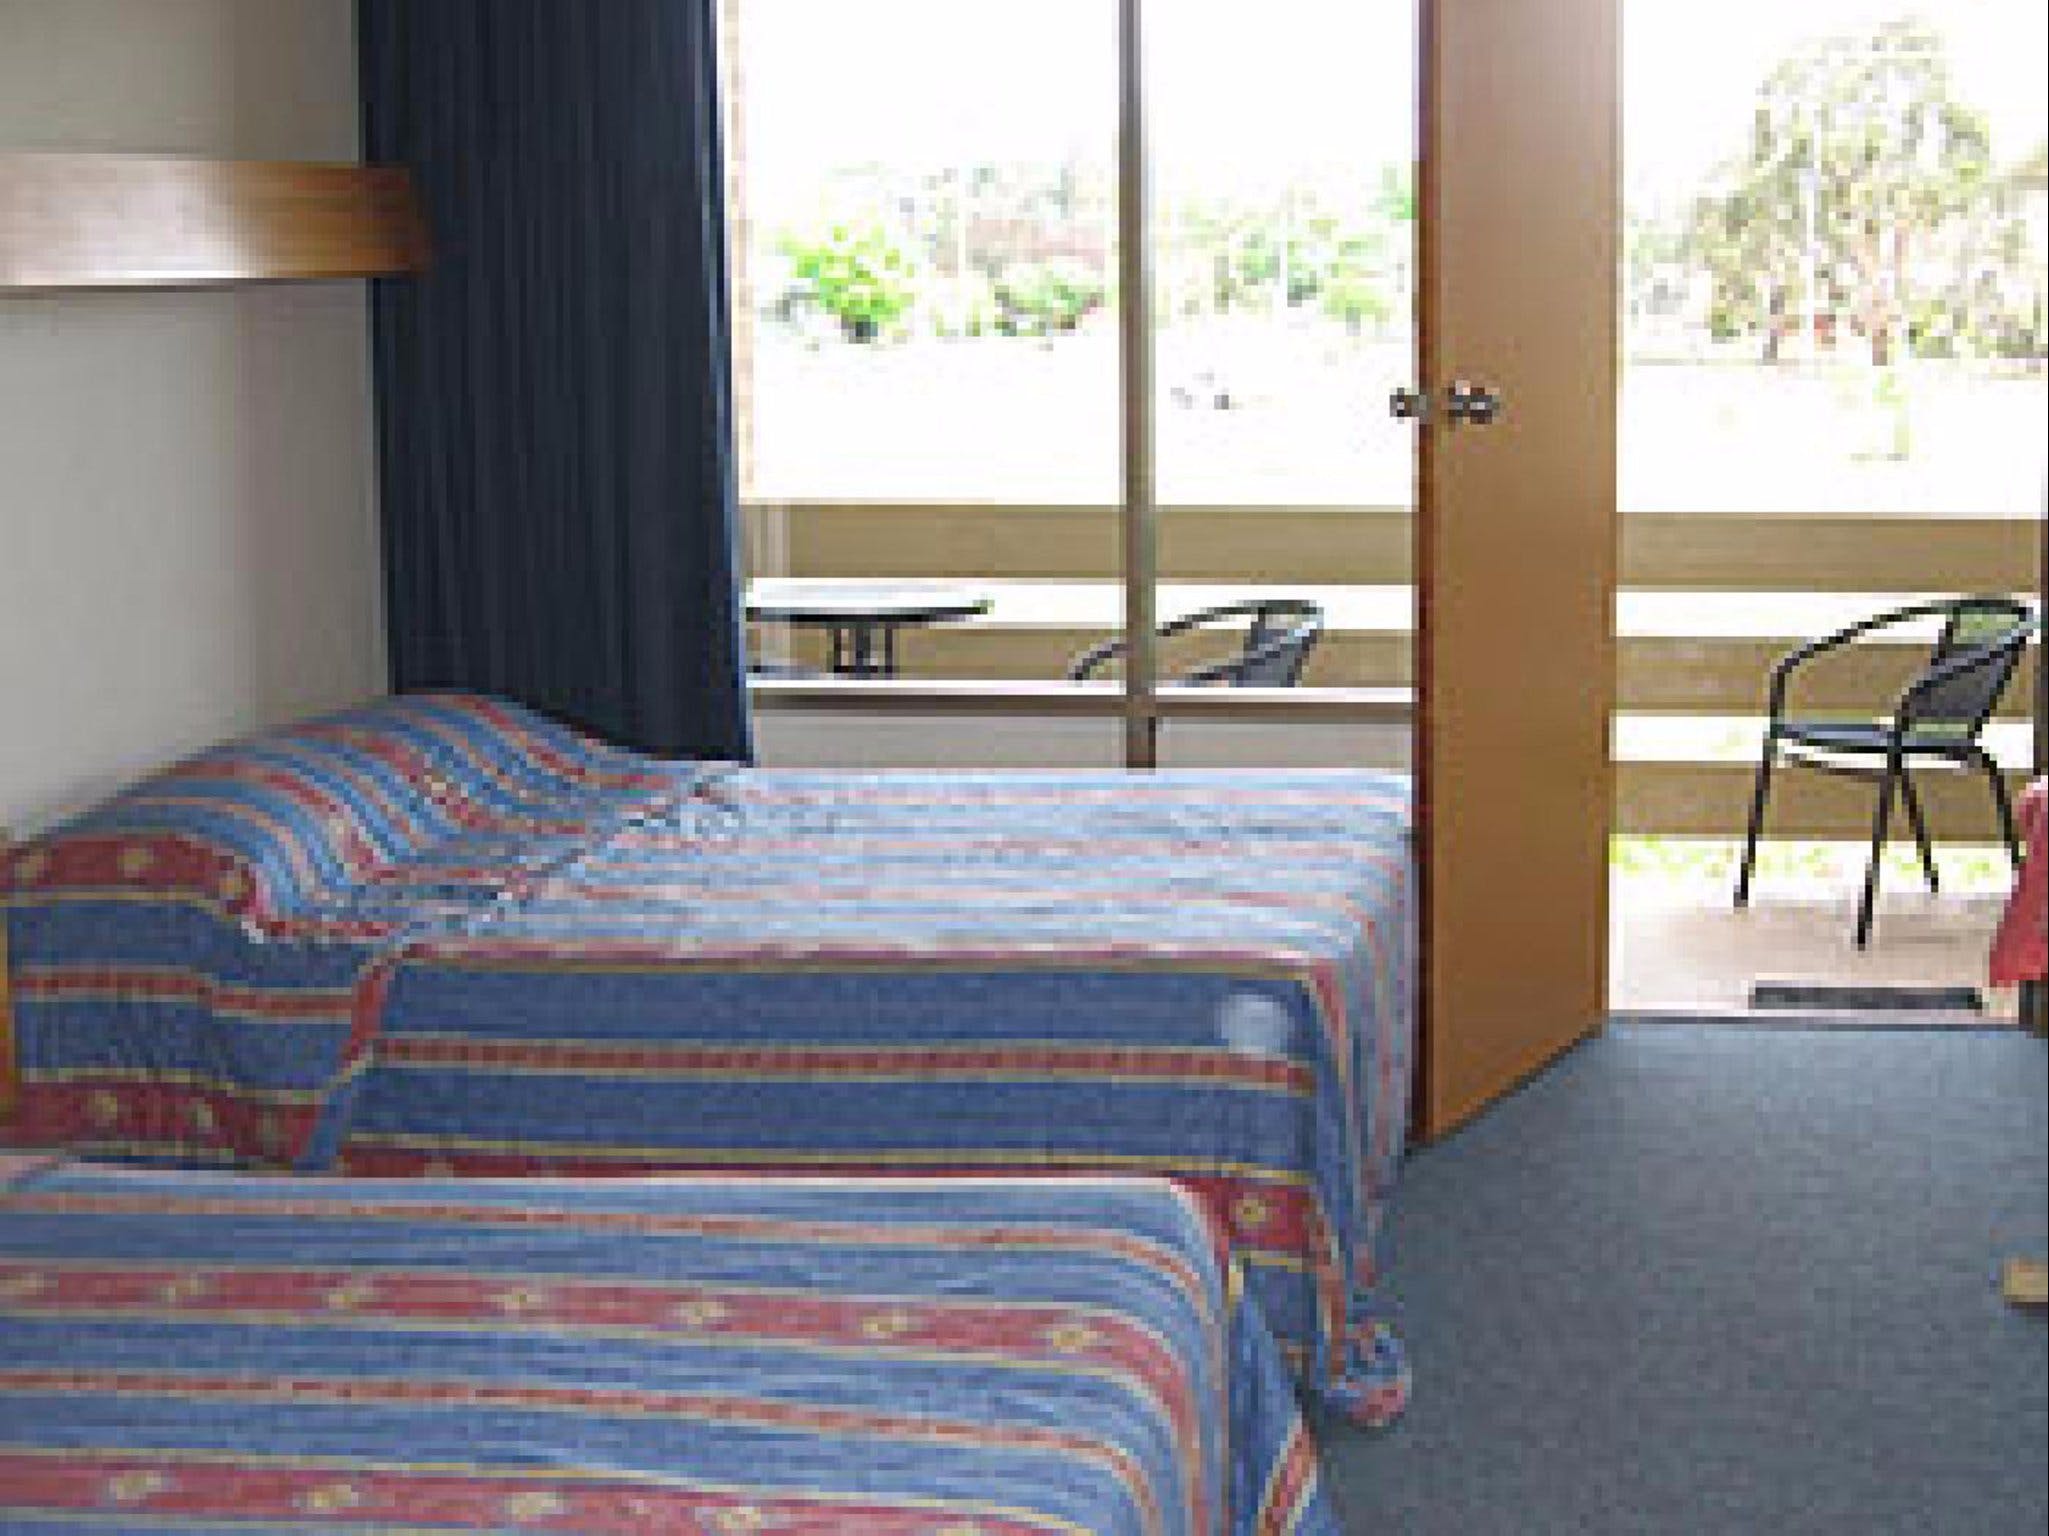 Red Cedars Motel - Accommodation Mount Tamborine